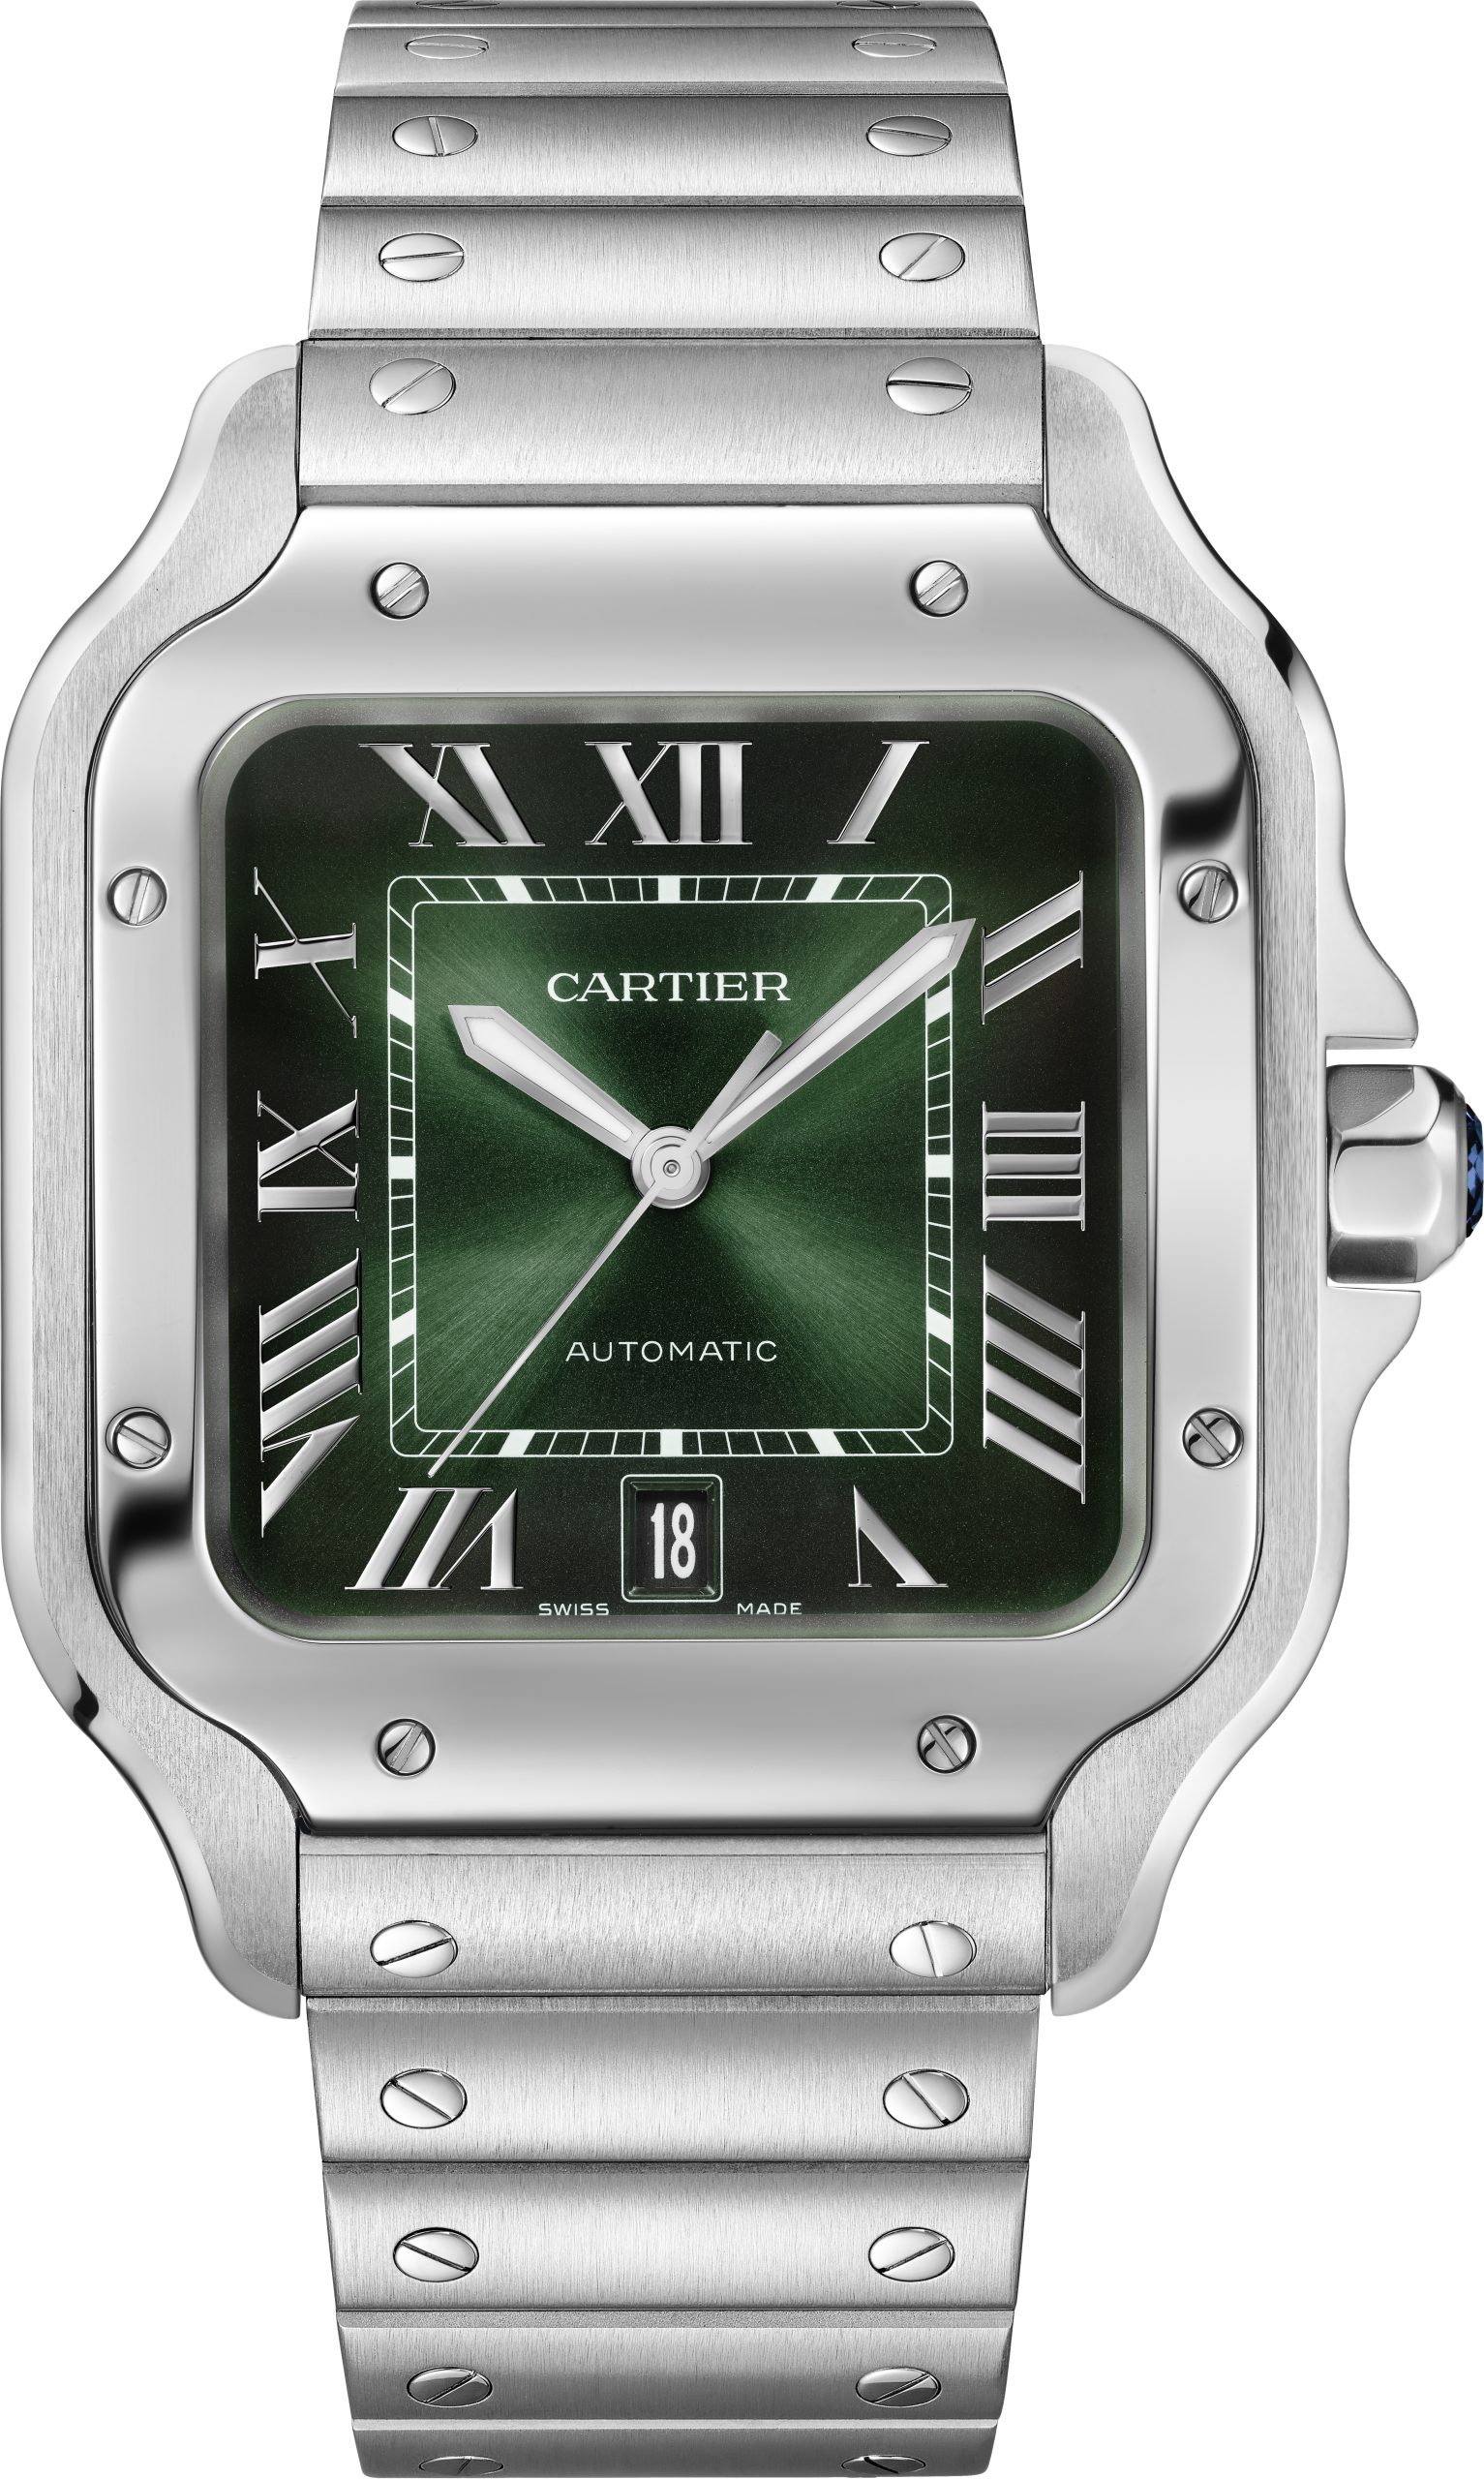 A bold new color for the Cartier Santos